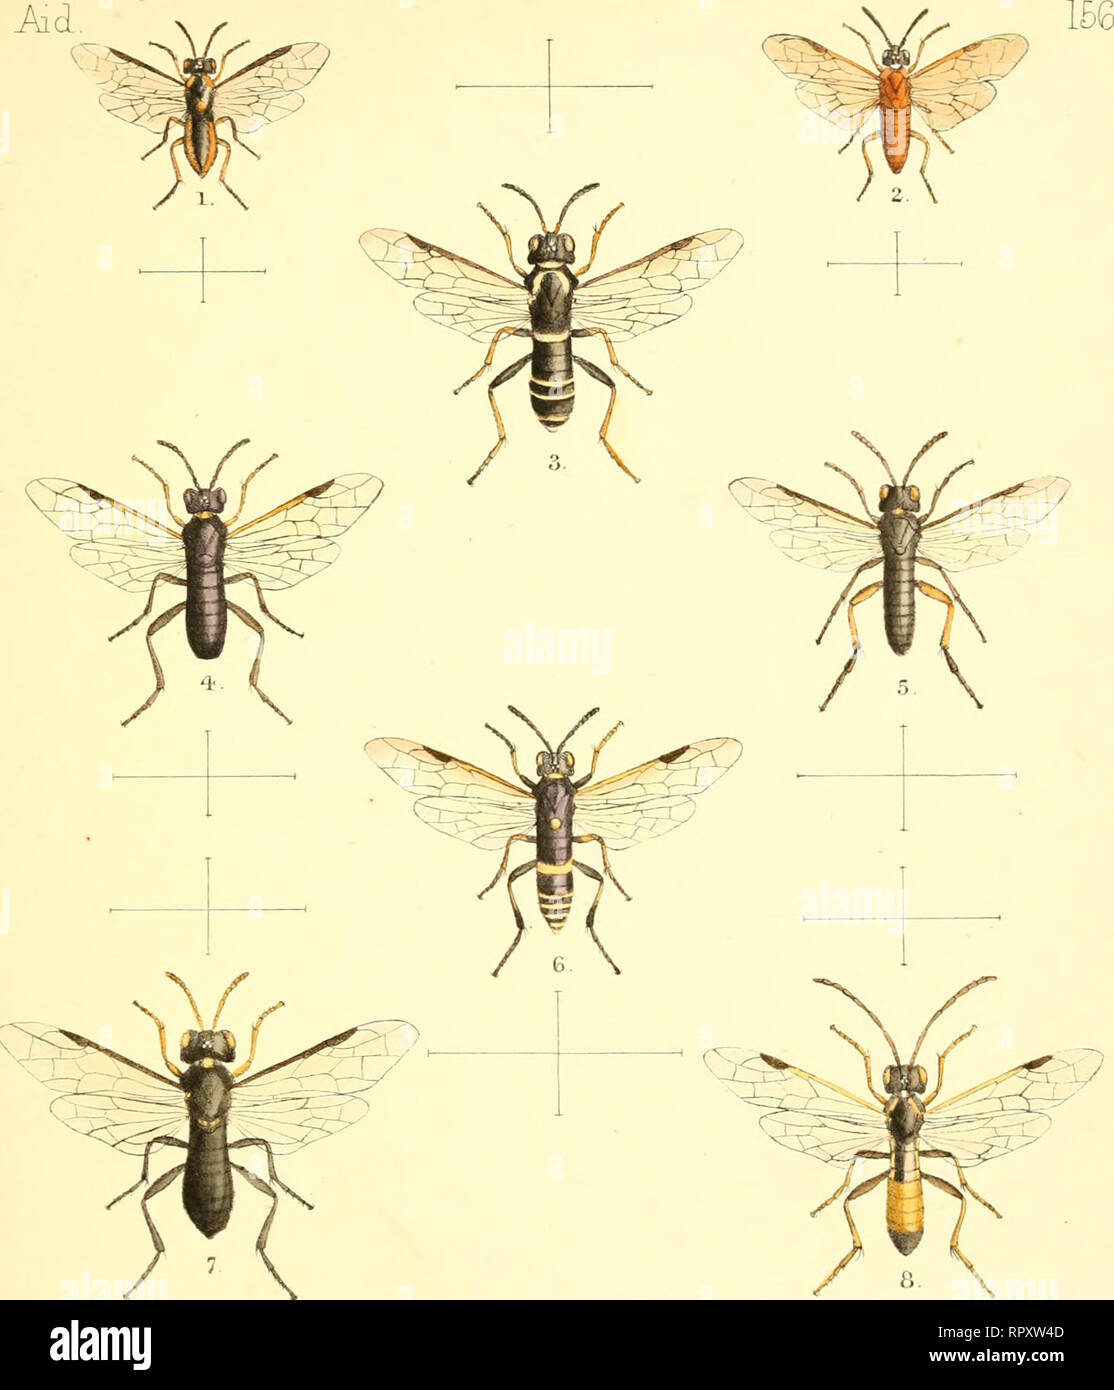 . Aid to the identification of insects. Insects. 1. Athalia mantima, Kvrh/^, Ervb. Munilu. Maq., XX, (18S^),-p215. 2. Hylotoraa fumipennis, Siniilv, Z^' Y(xr^h^anjdj'^Mit5s.}fymjerup818)p^8. 3. Aliantus simillimus, SrrvdJv, Z^ Yasrkound^ Mws. Hyrruero., (IS 7S),p. 19. 4. Allajitus t&amp;-pTmJYiA^s,Sr7wth,2'^ YctrkourulMiss .HyrnMrup87S),p .19. 5. Allart&quot;us ppovidus.cS'TTit^^ 2^^ Ycukanj(LJ/[i^s.HyTnjeru,(lS78),p . Id. 6. Allantus TmAACoQ-p,cSrfwt}v Z&quot;^YcurhccrulJ^uss .Hjrrieru.pS78),p. 18. 7. Macroptiya oy^osiiia.,Srni;ui,,2^.}cu'kanx^Miss.H^ . 19. 8. TerLthredo siirailata,Snuth,Z Stock Photo